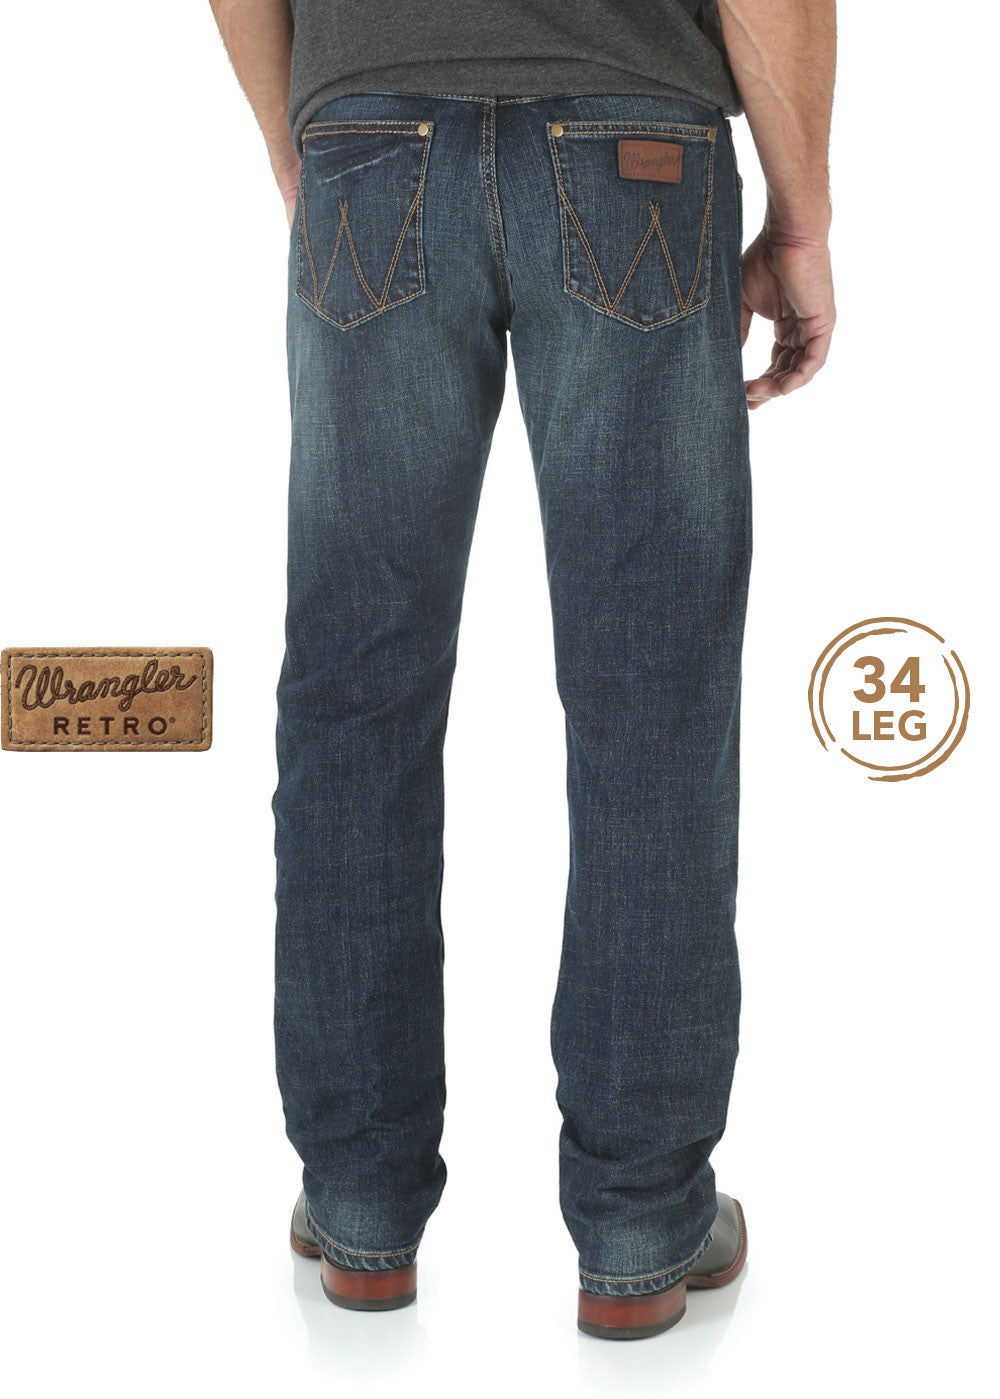 Wrangler Retro Slim Straight Jean 34 Leg